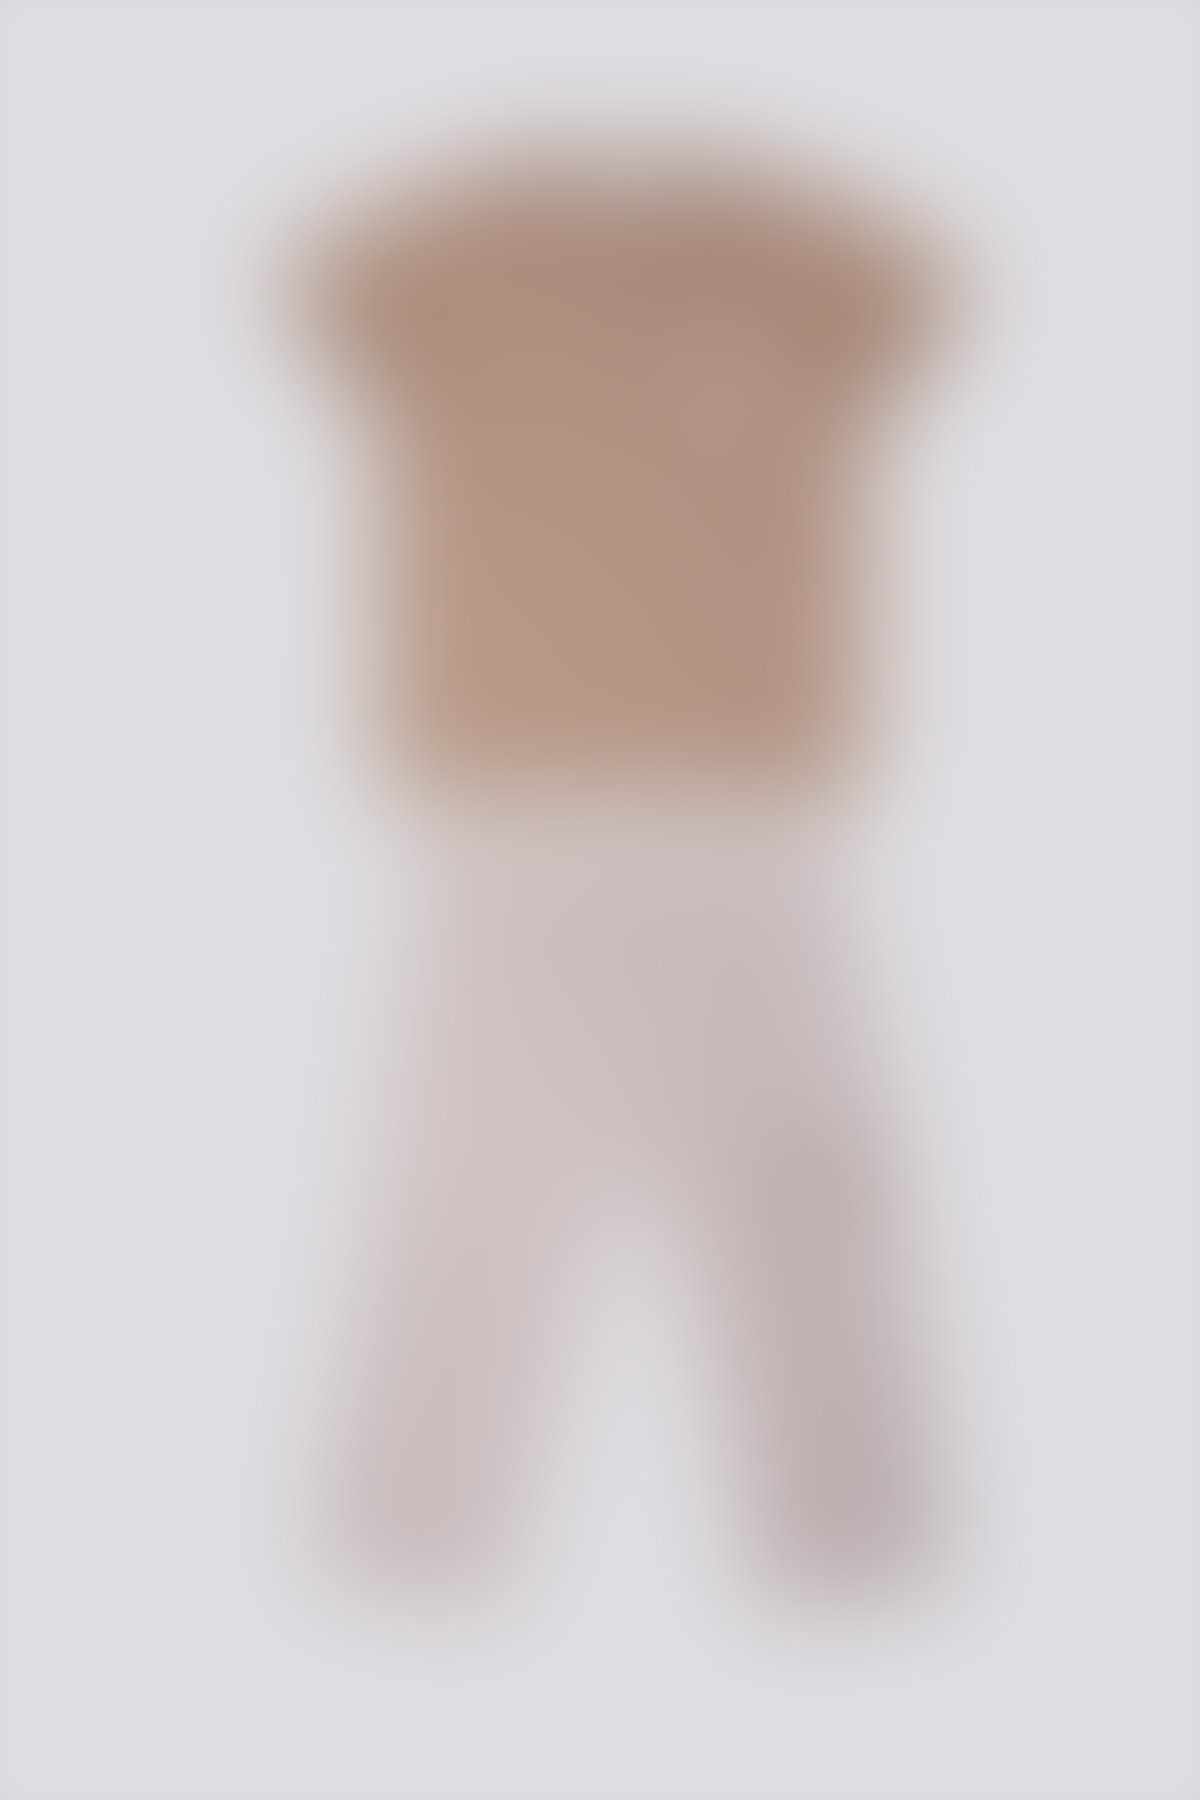 U.S. Polo Assn - U.S. Polo Assn Delicate Light Texture Açık Kahverengi Bebek Tshirt Takım